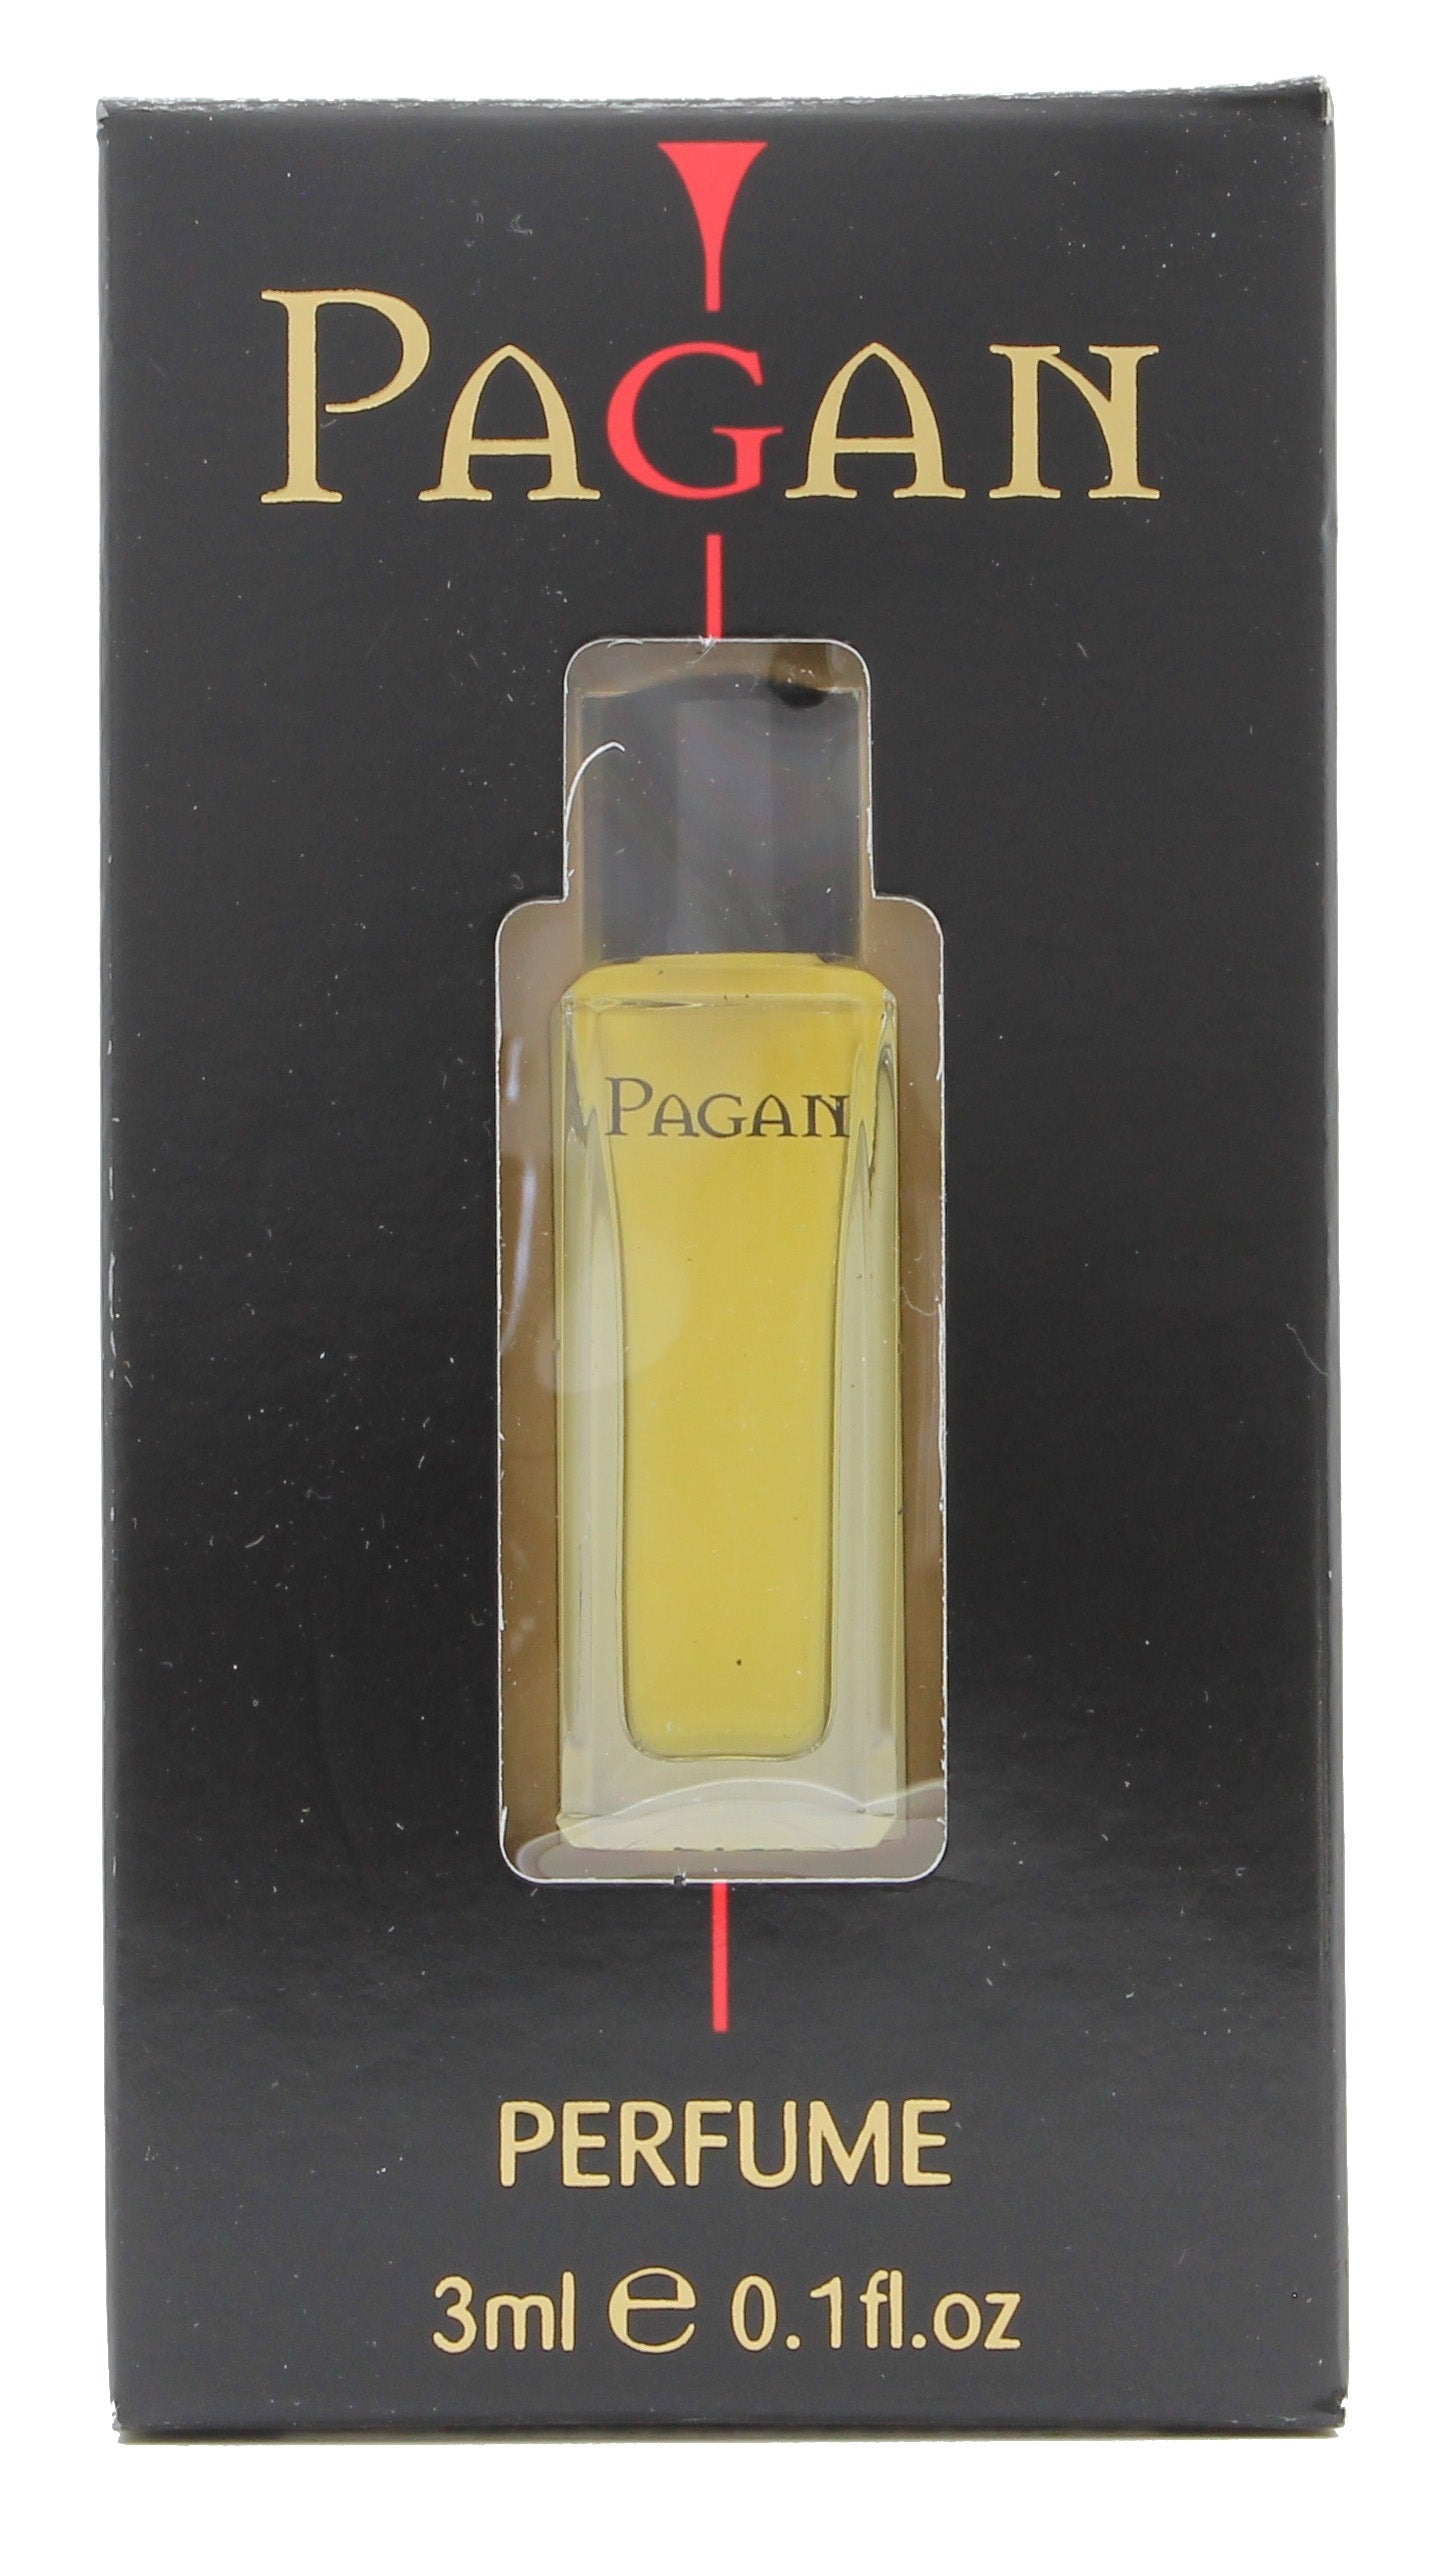 View Mayfair Pagan Perfume 3ml information